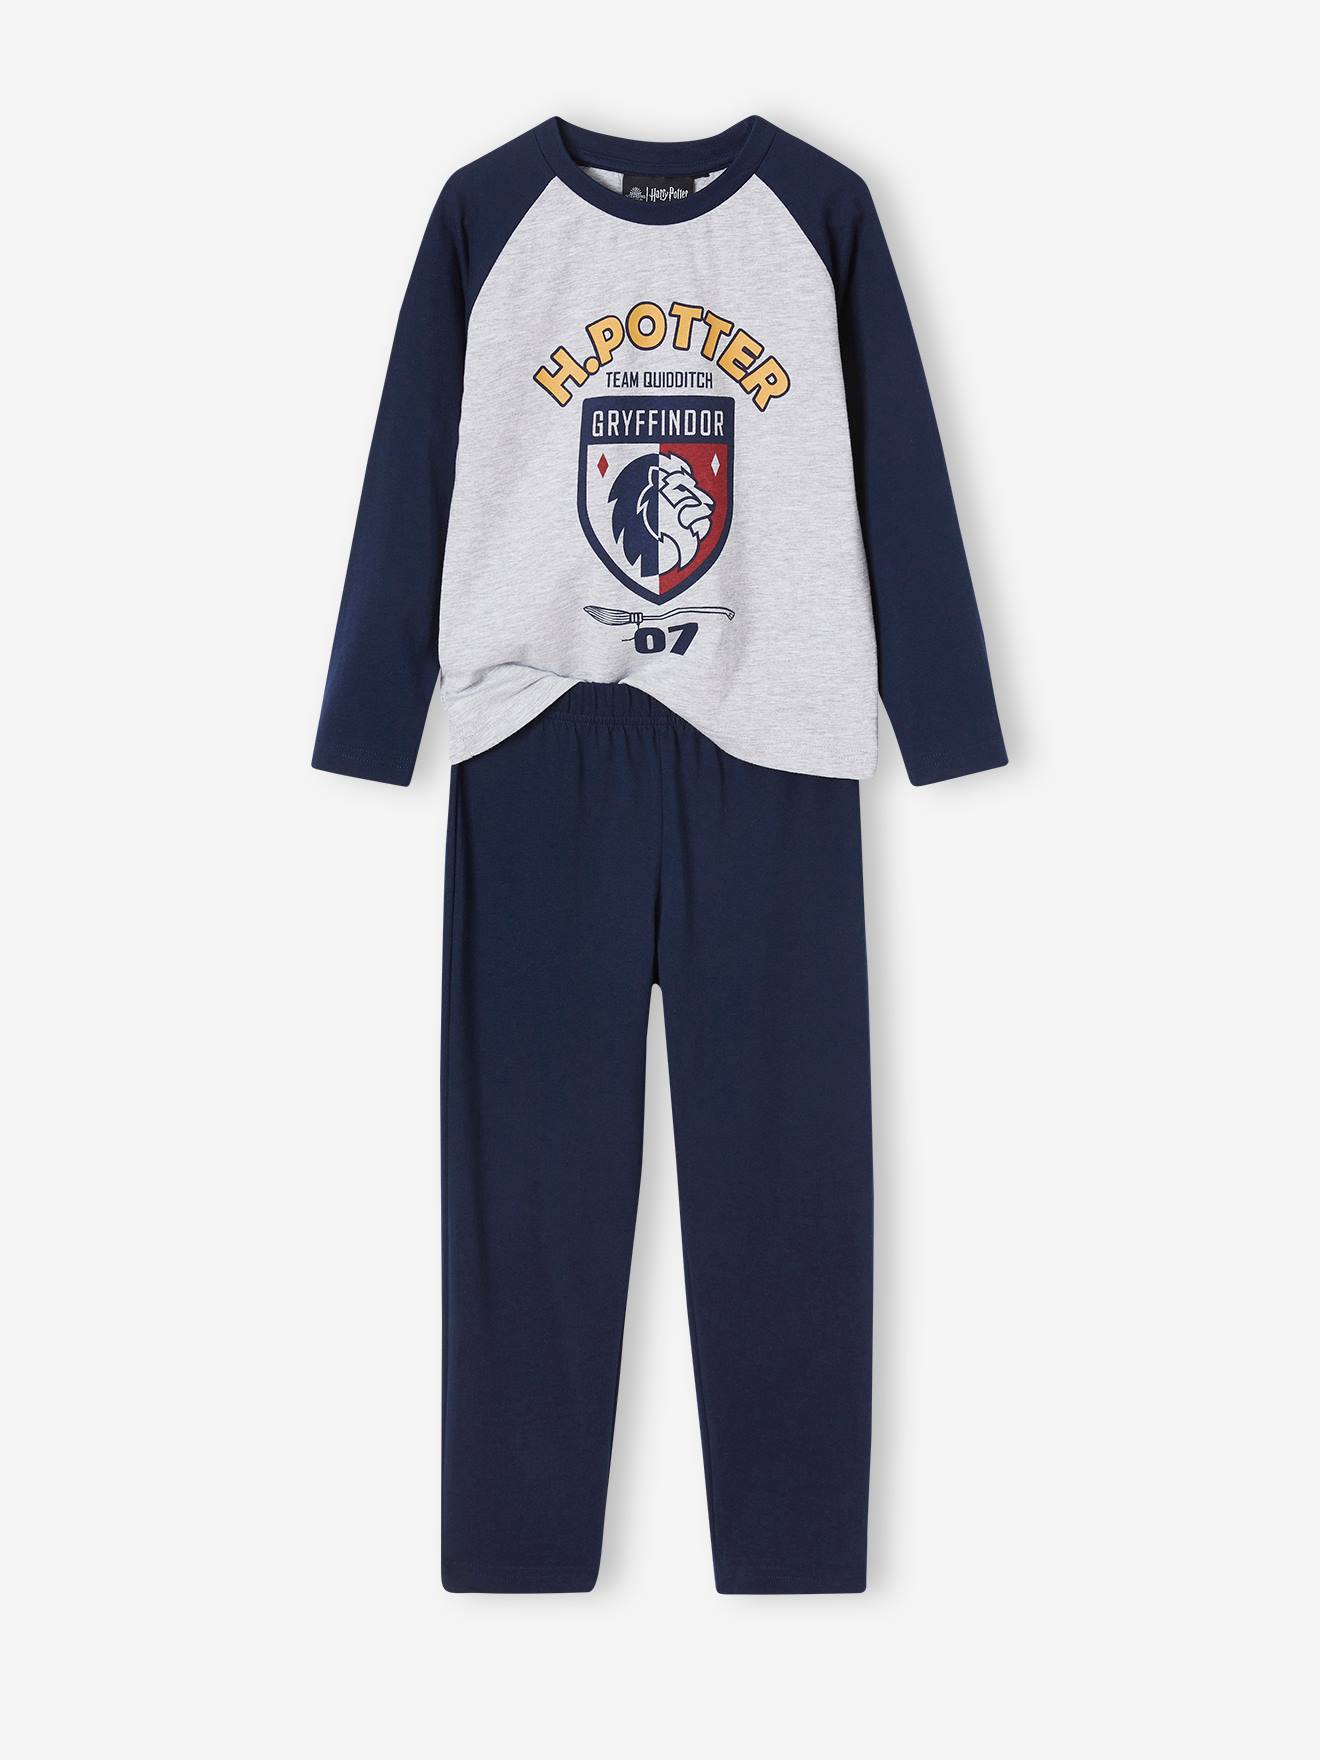 Harry Potter(r) Pyjamas for Boys navy blue